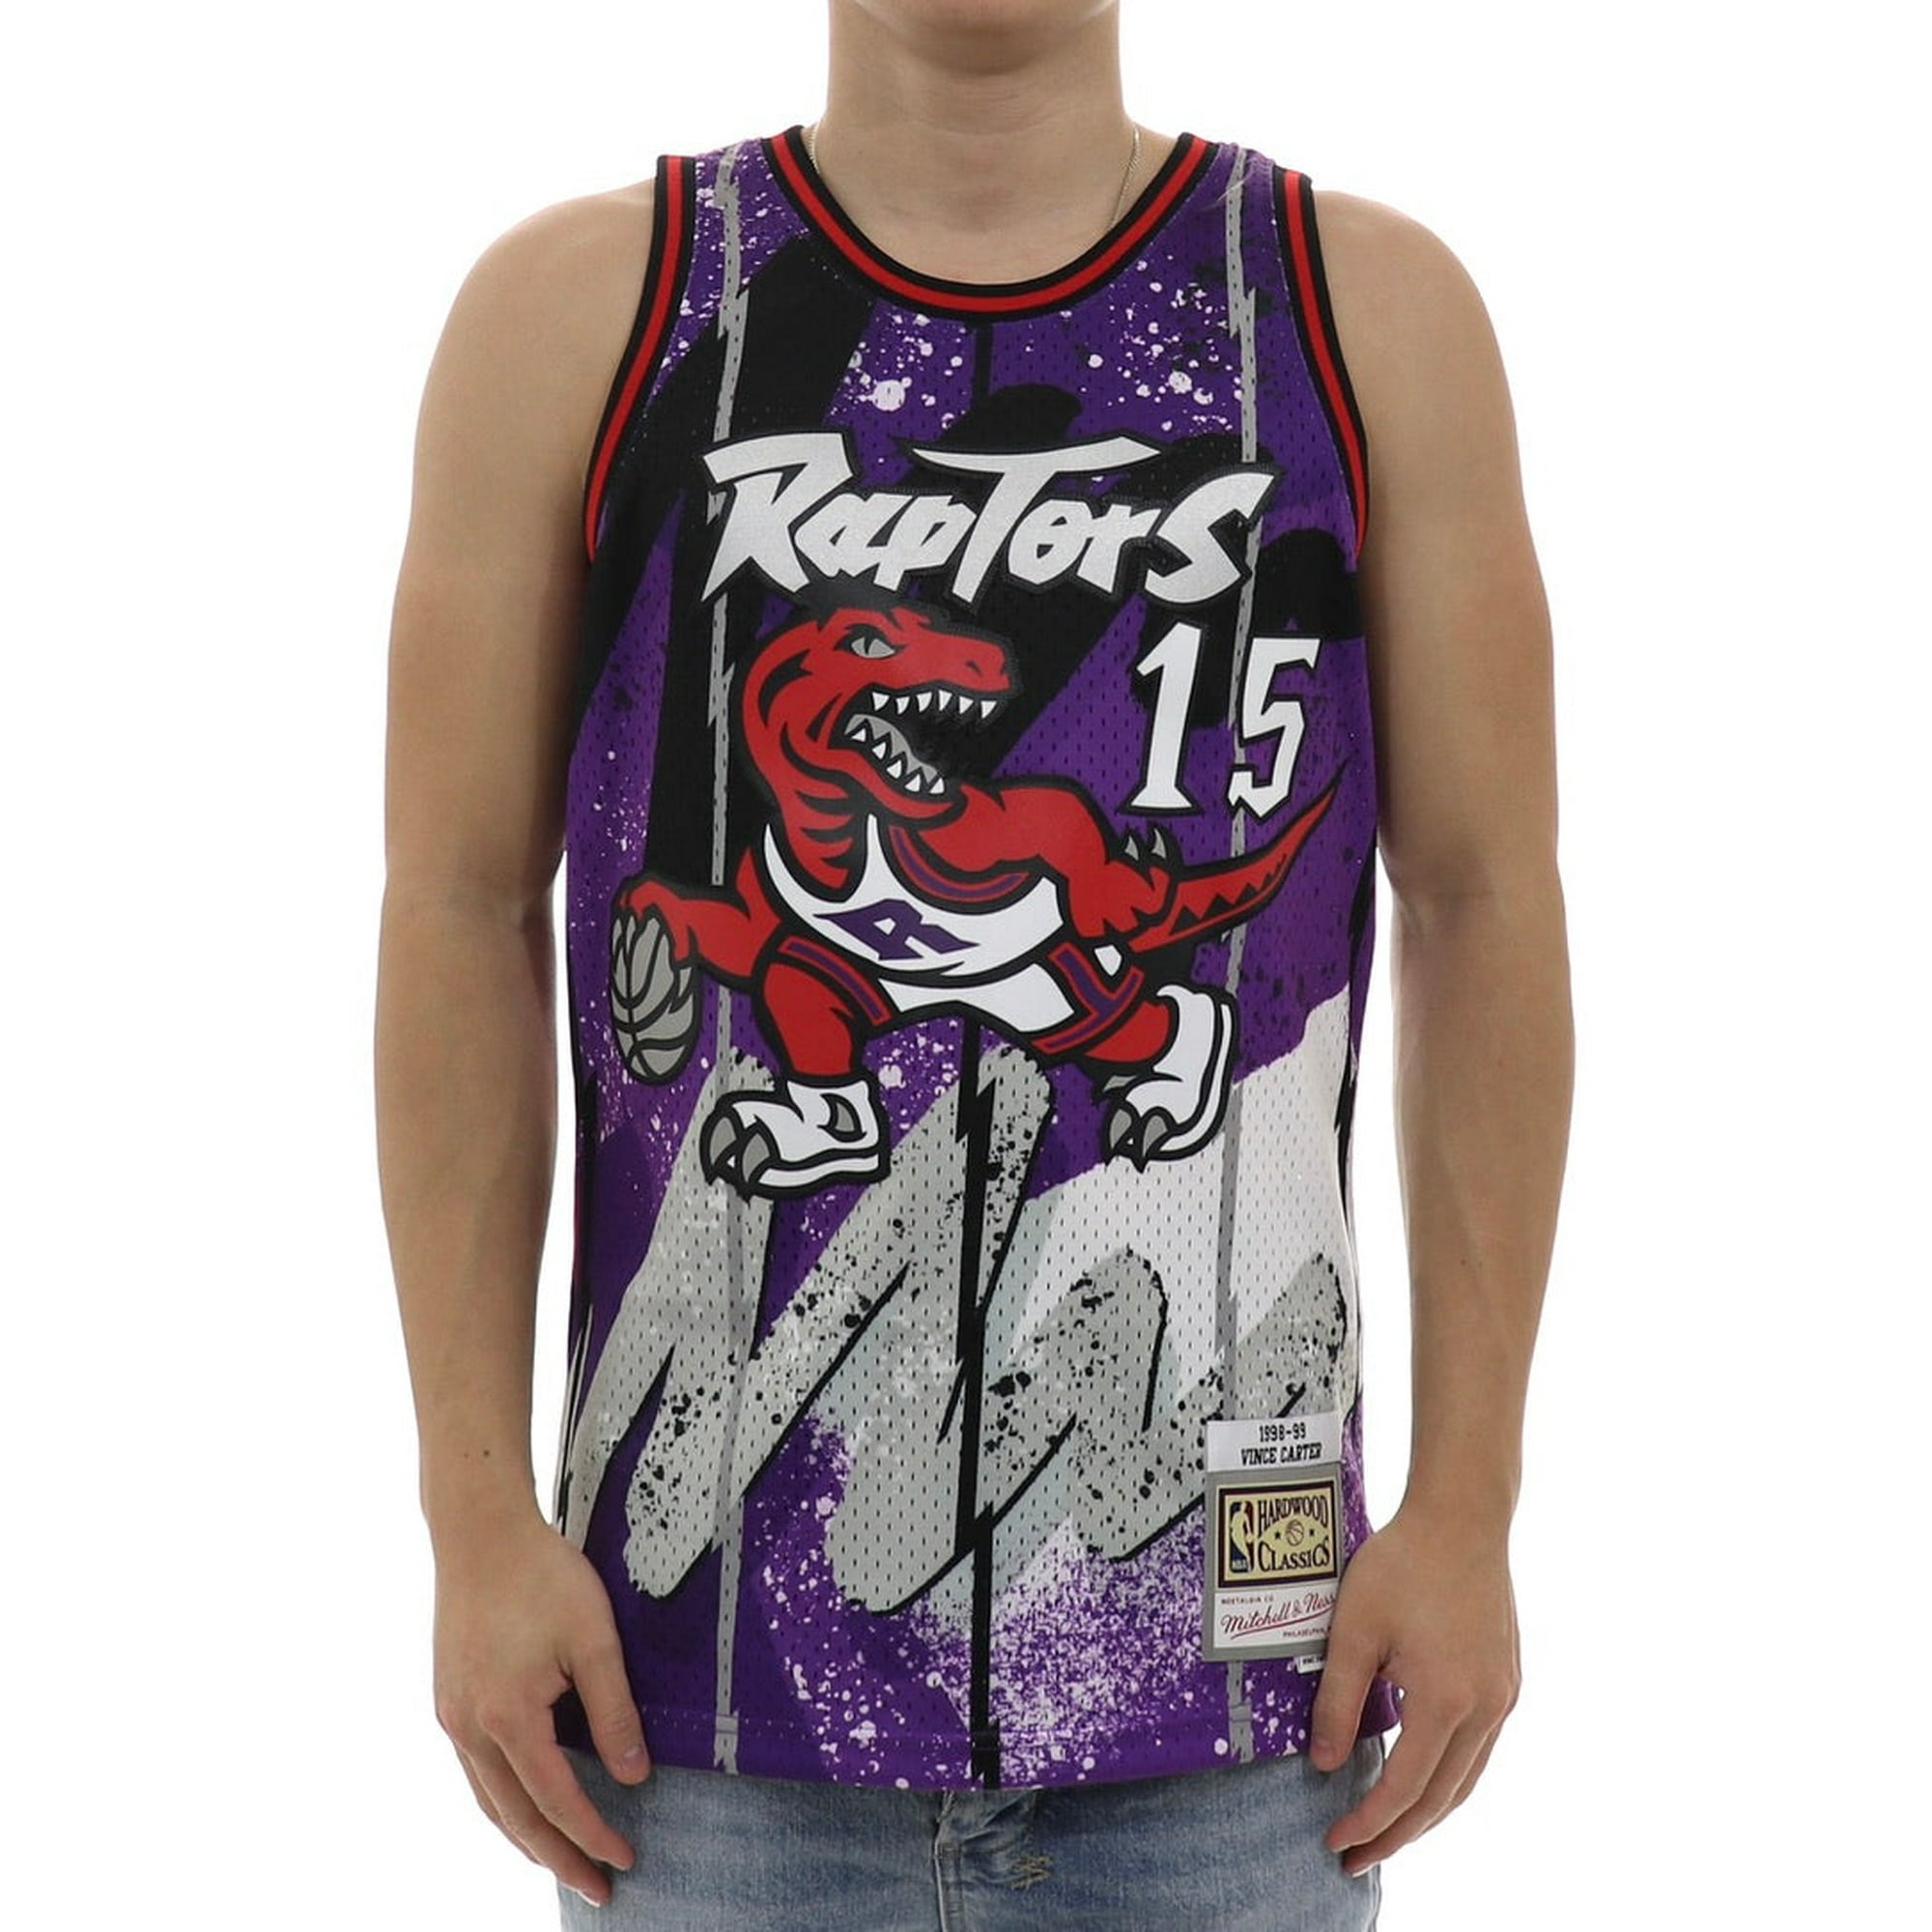 Mitchell & Ness Authentic Jersey Toronto Raptors Road 1998-99 Vince Carter